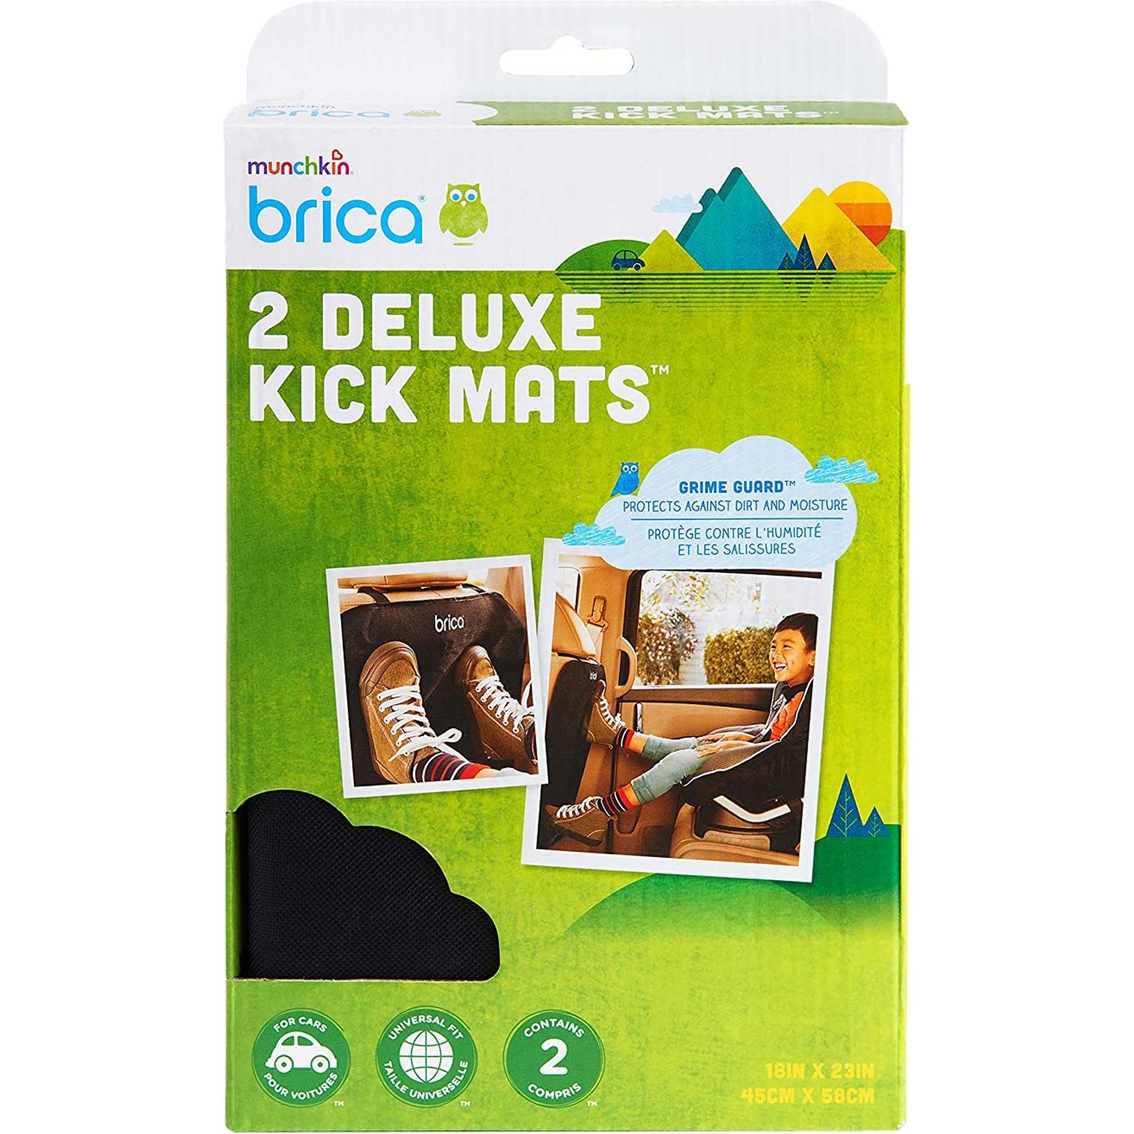 Brica by Munchkin Deluxe Kick Mats 2 pk. - Image 2 of 4